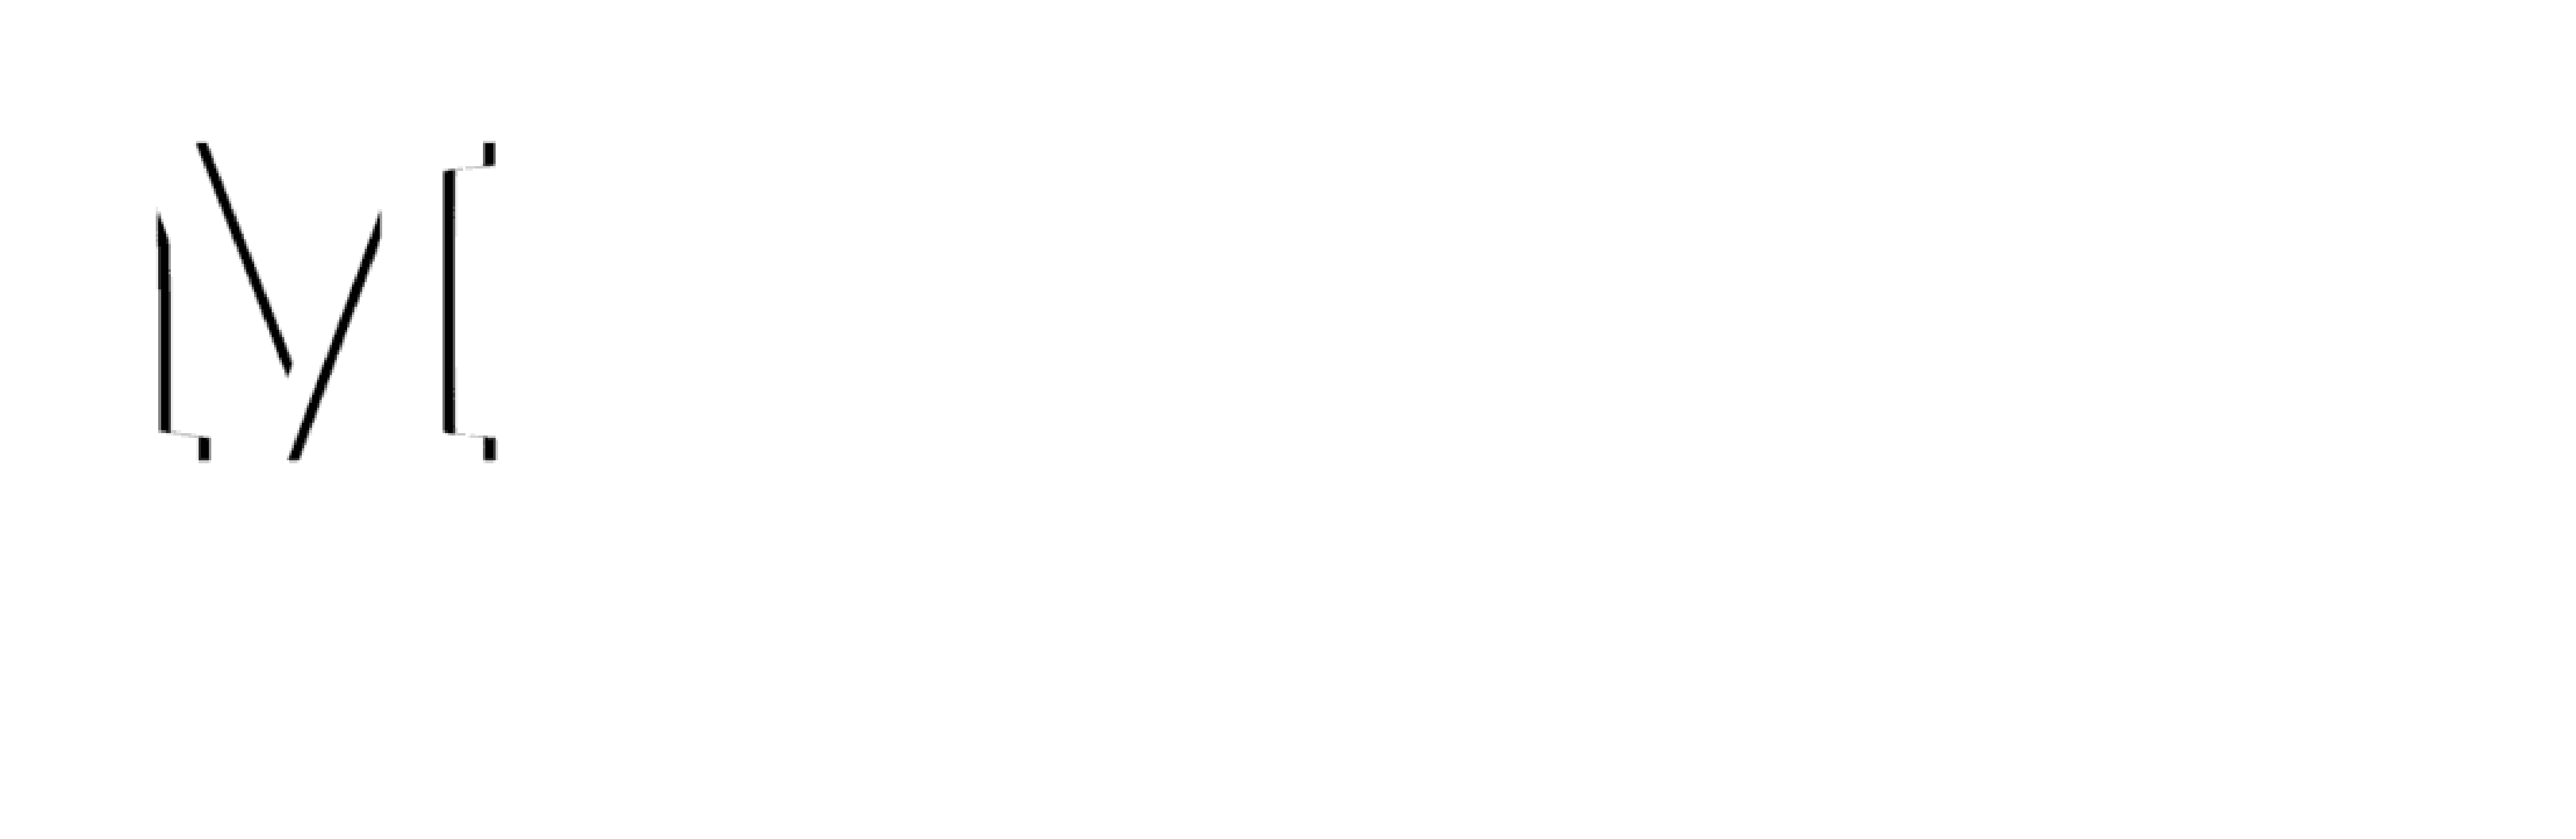 Morristown Cosmetic Dentistry: Victor Gittleman, DMD
 logo